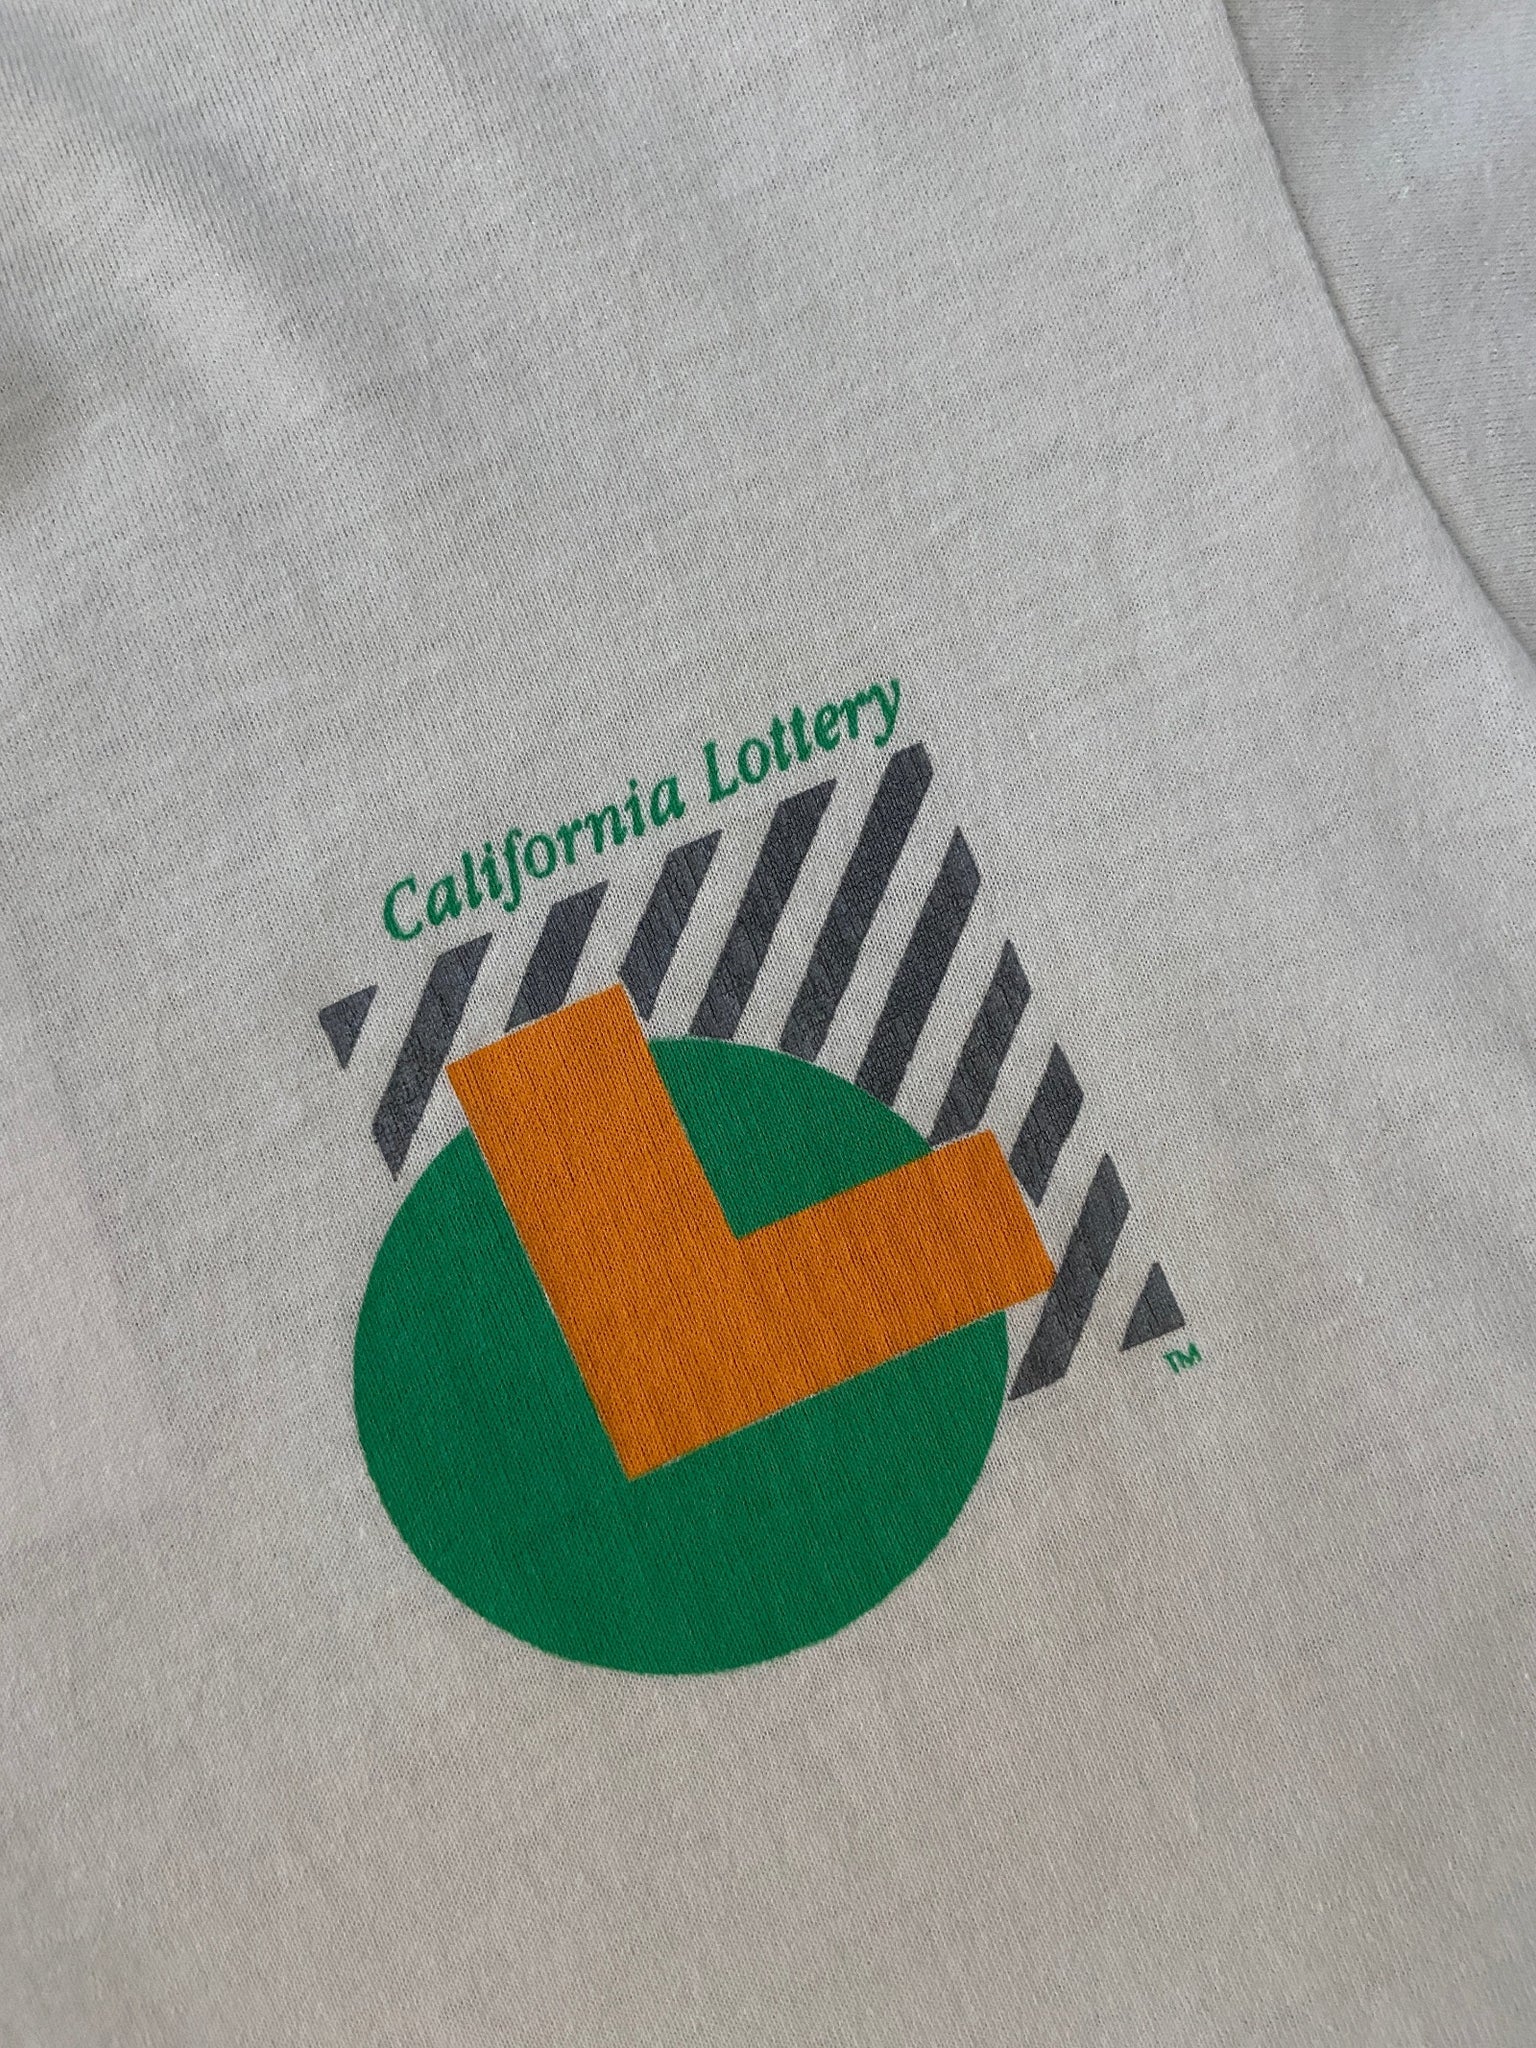 California Lottery T-shirt - L